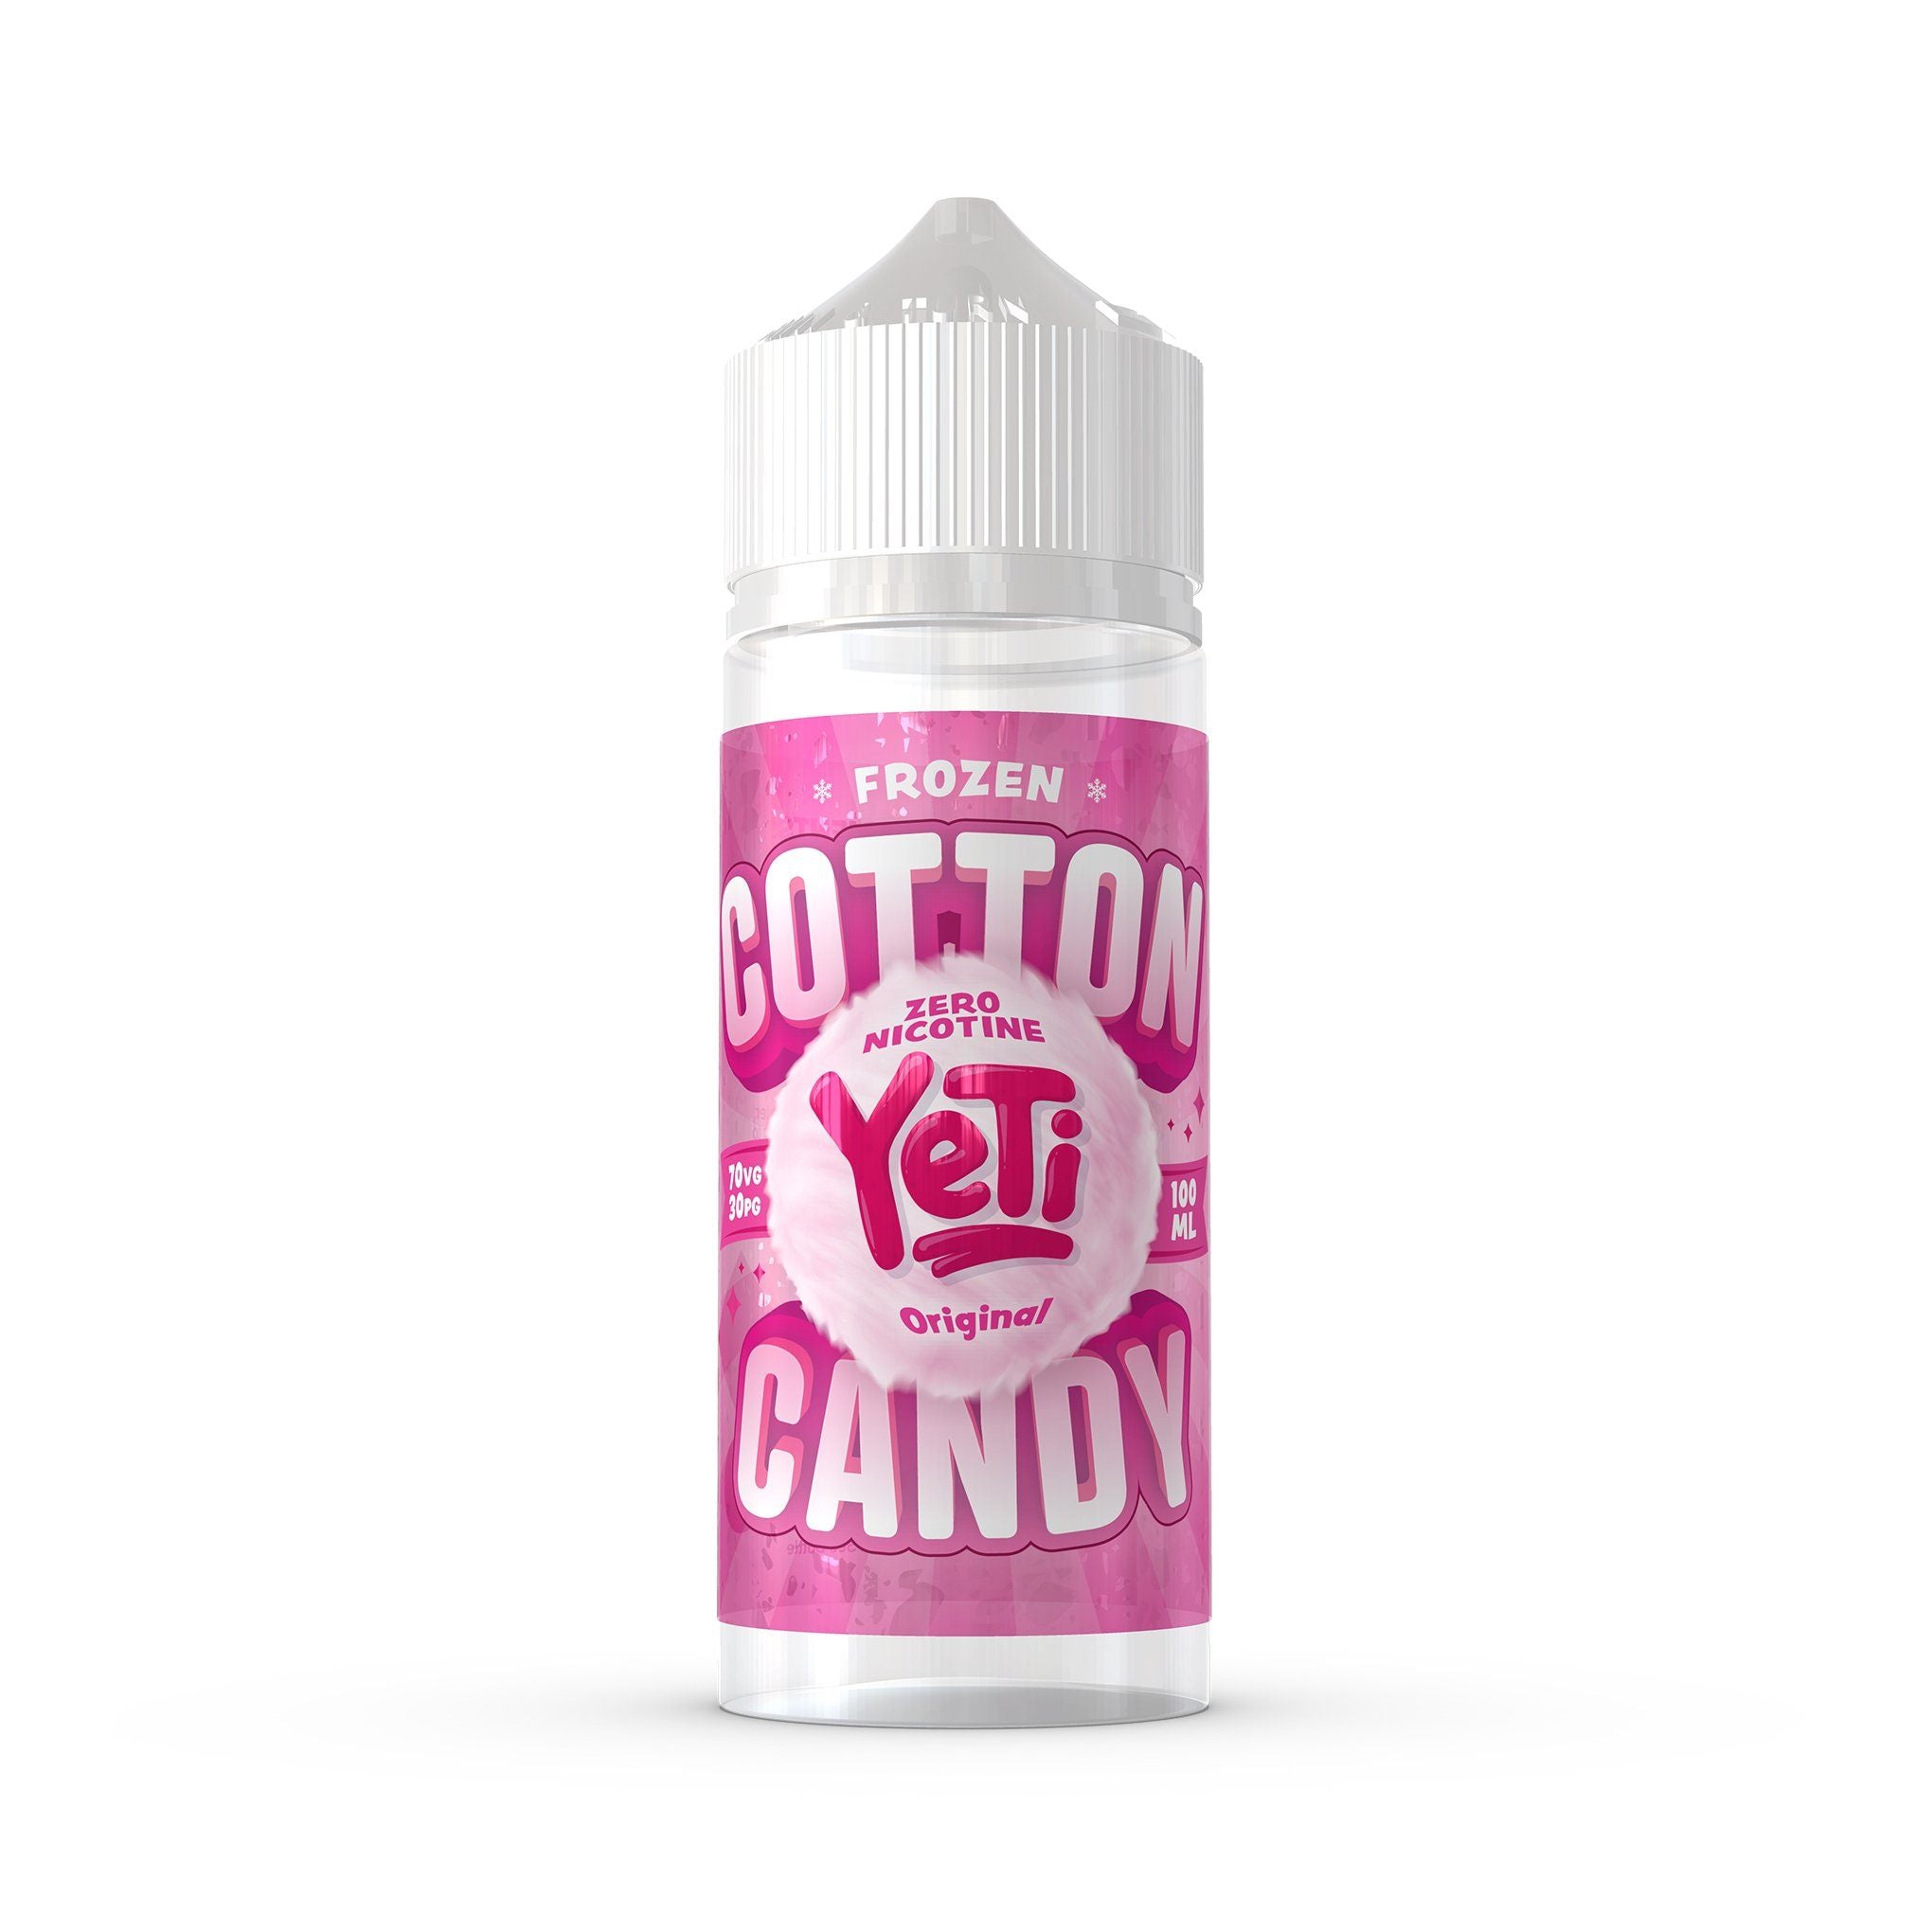 Yeti Cotton Candy Short Fill E-Liquid Original 